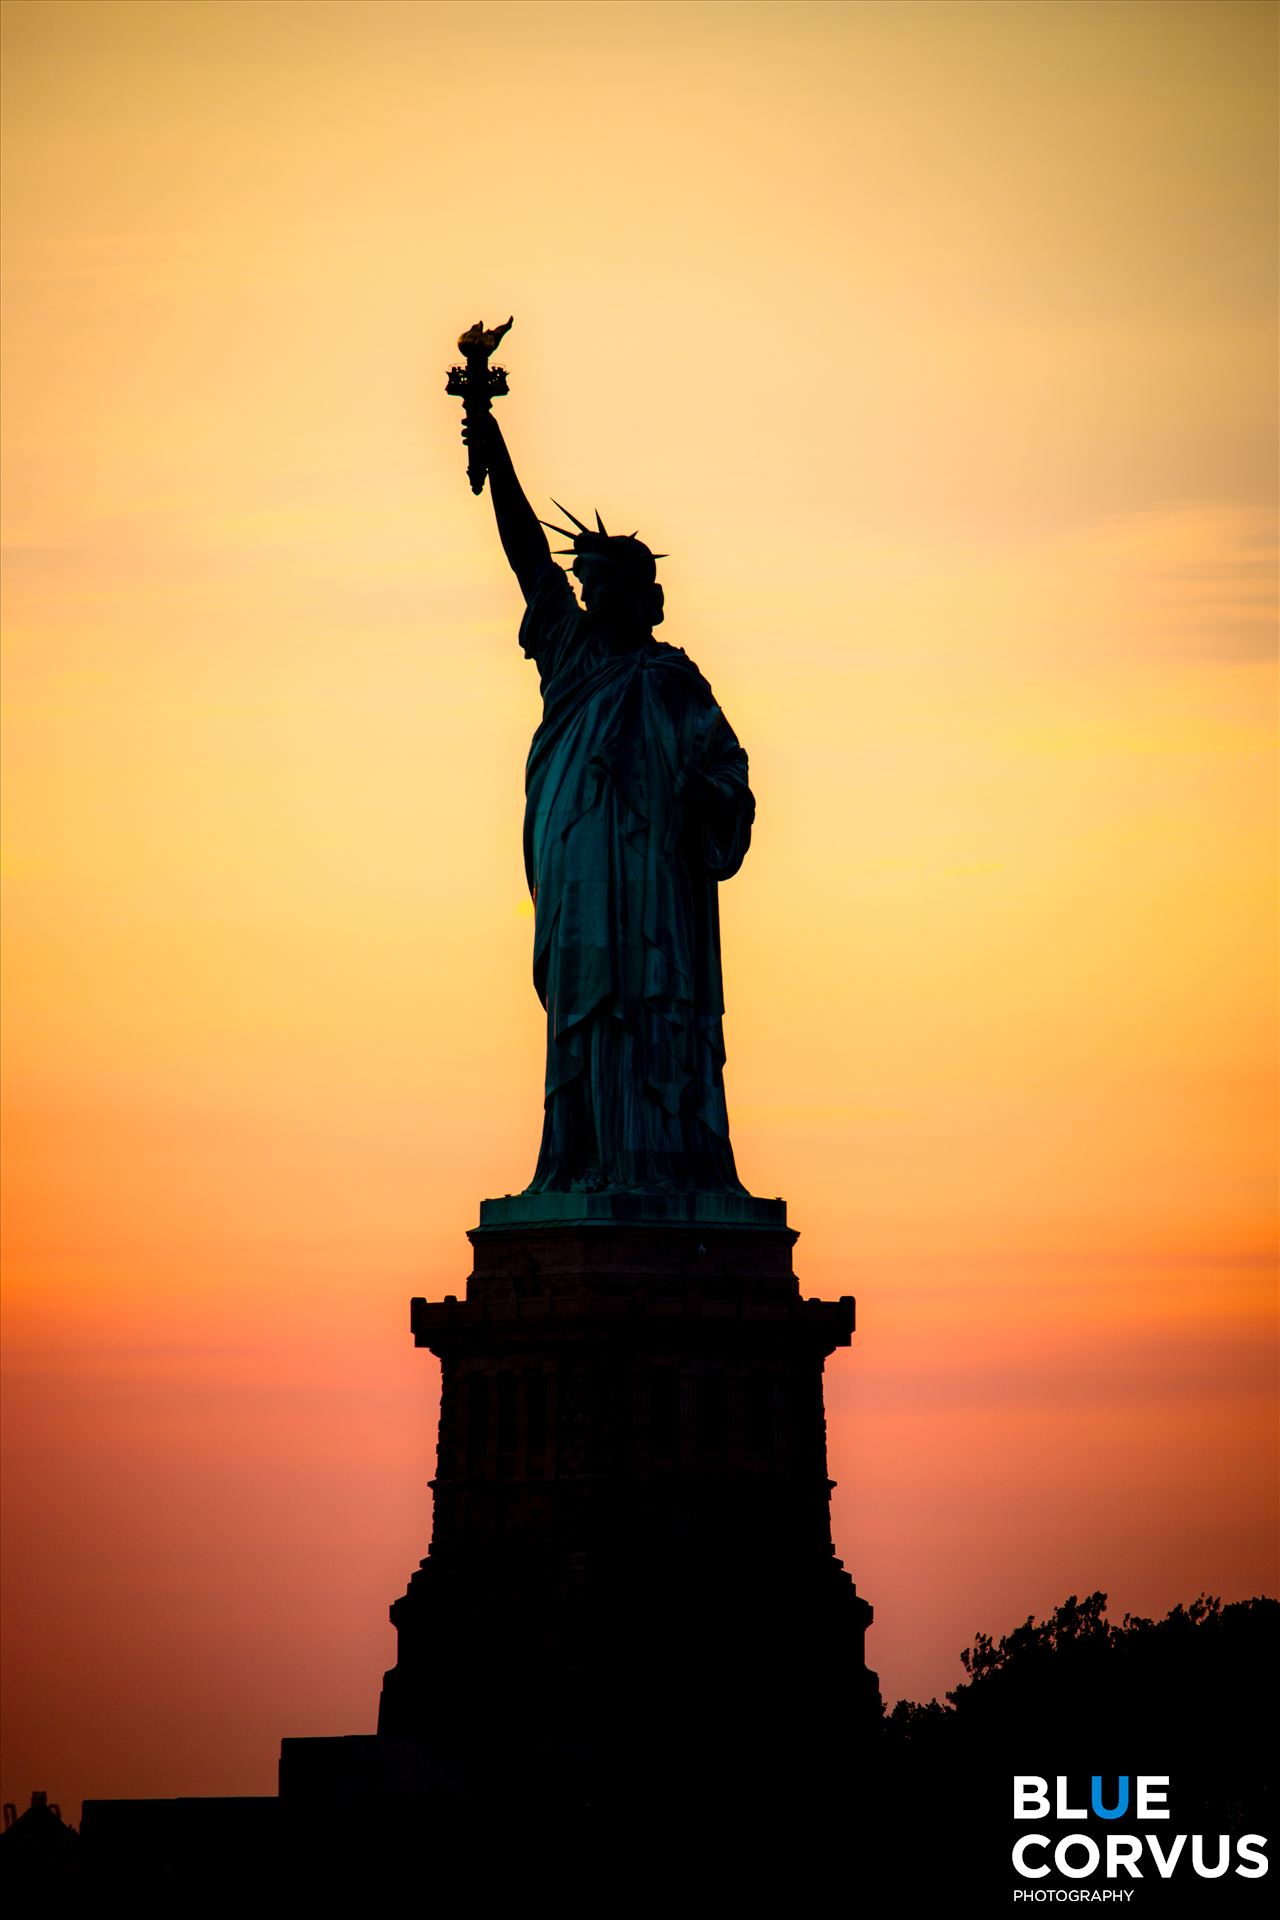 "I Lift My Lamp Beside the Golden Door" Location: New York, NY by Eddie Zamora